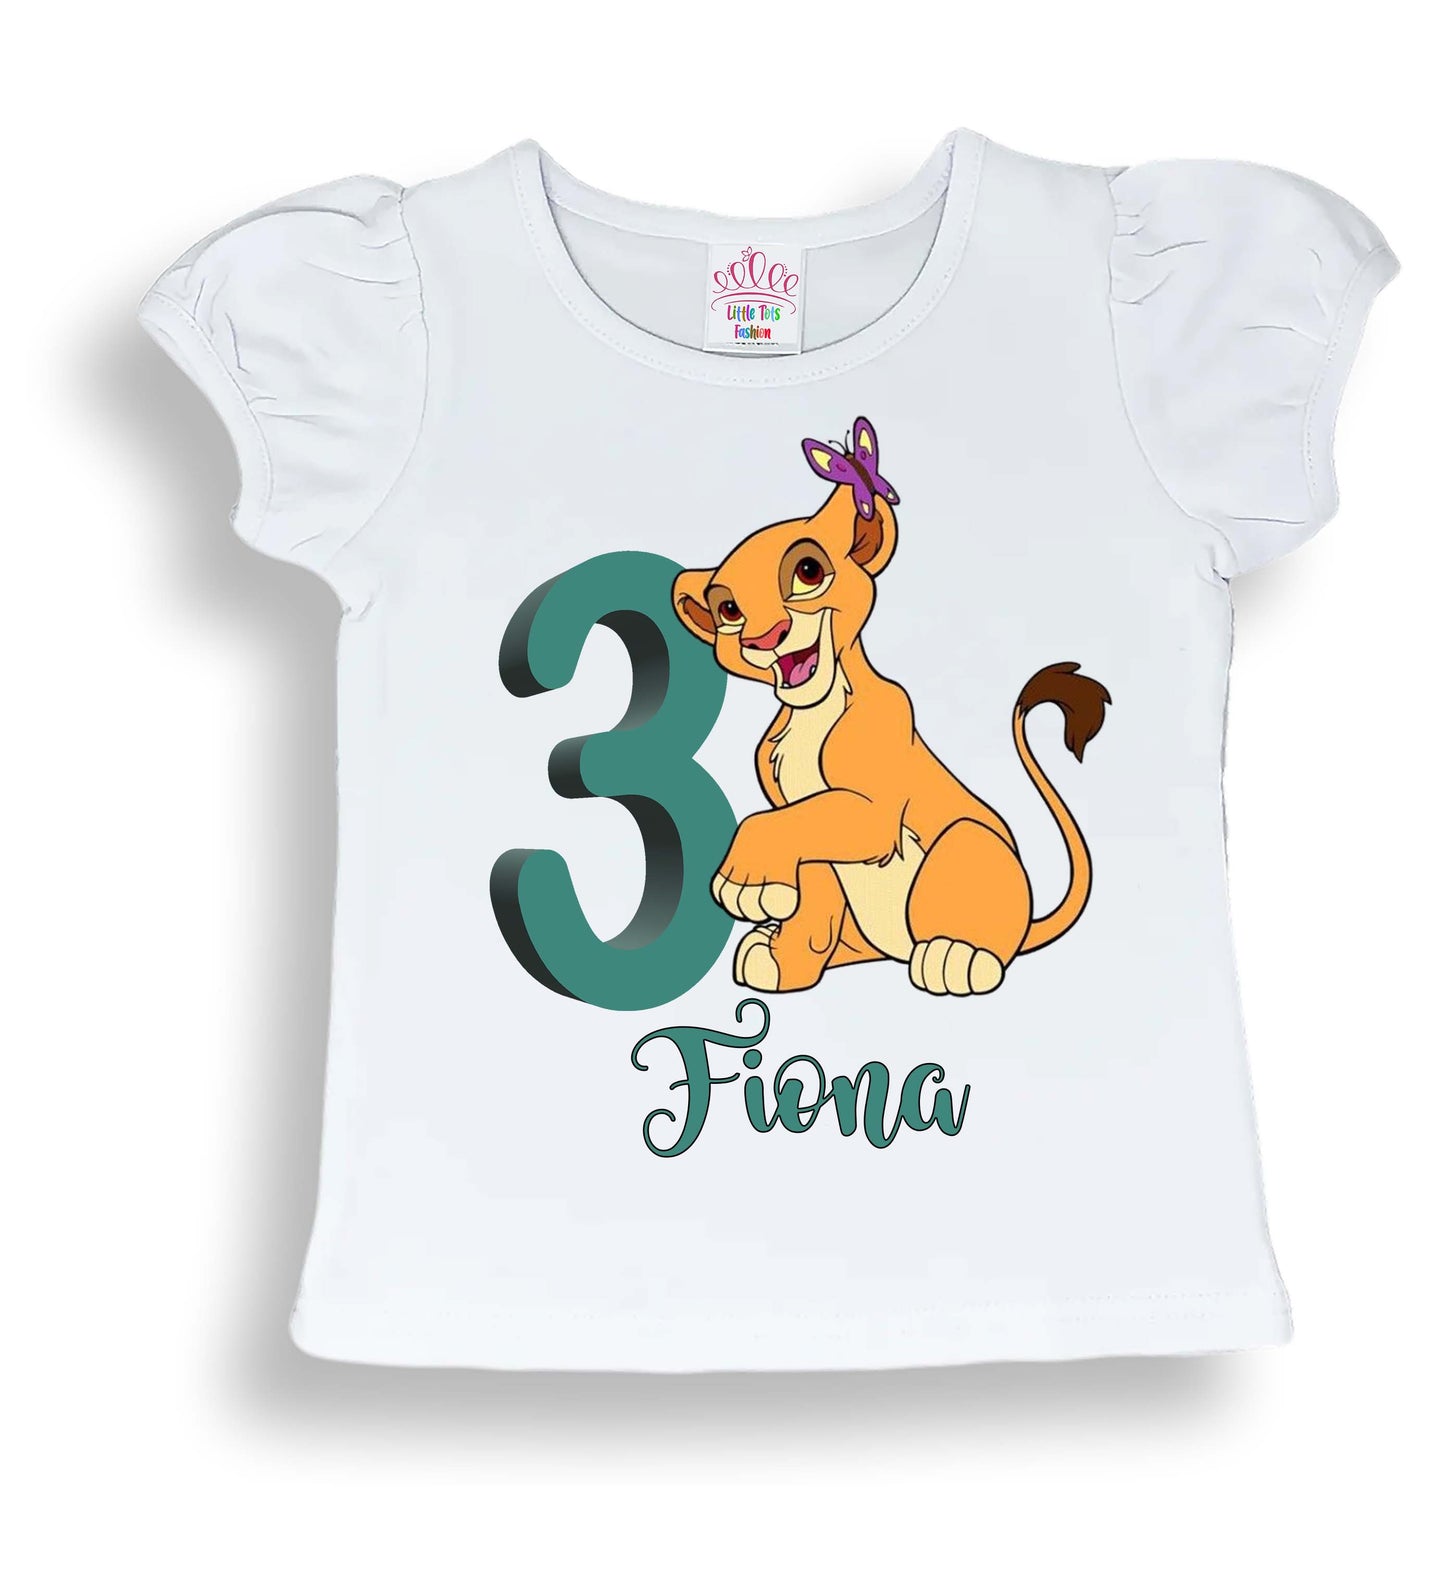 Simba t shirt | Girls Lion King Birthday shirt | Toddler Simba shirt | Girls shirts | Lion King Personalized girls shirt.